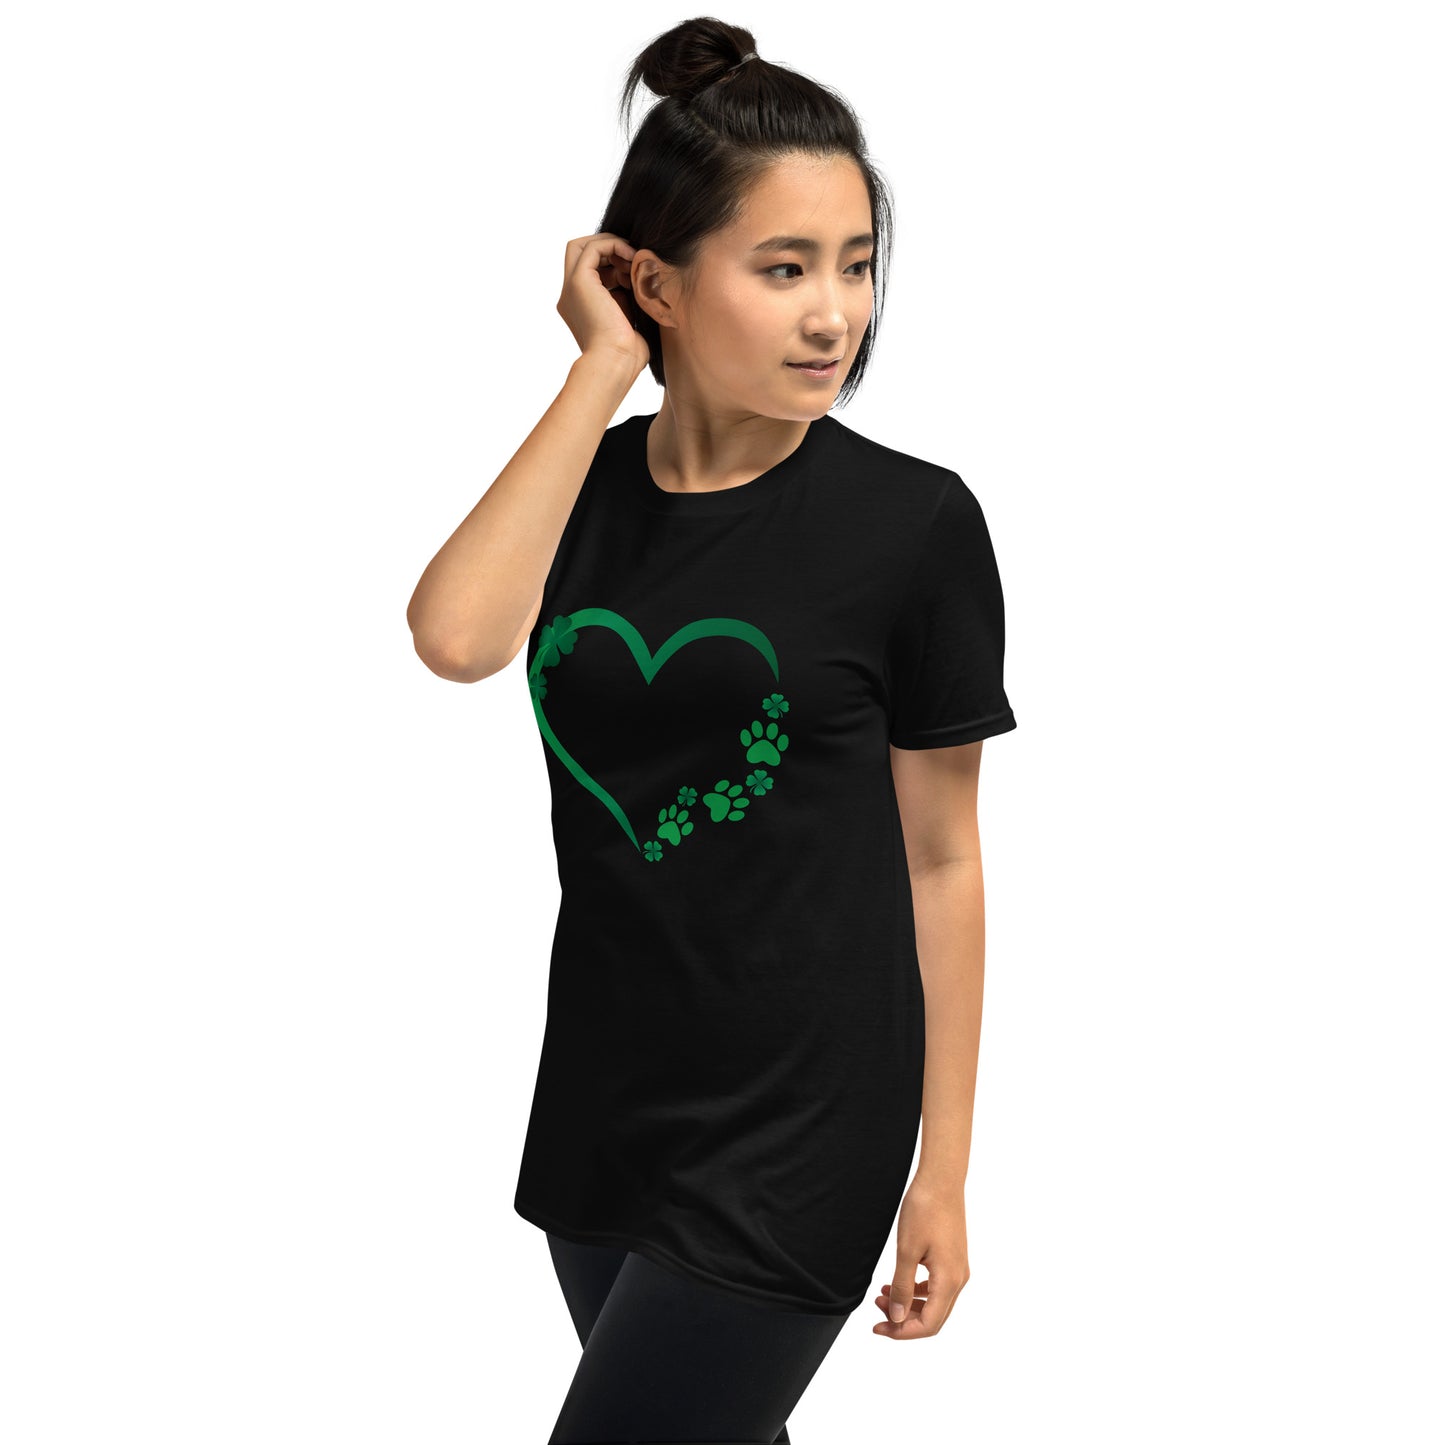 St. Patrick's Paw Heart T-Shirt